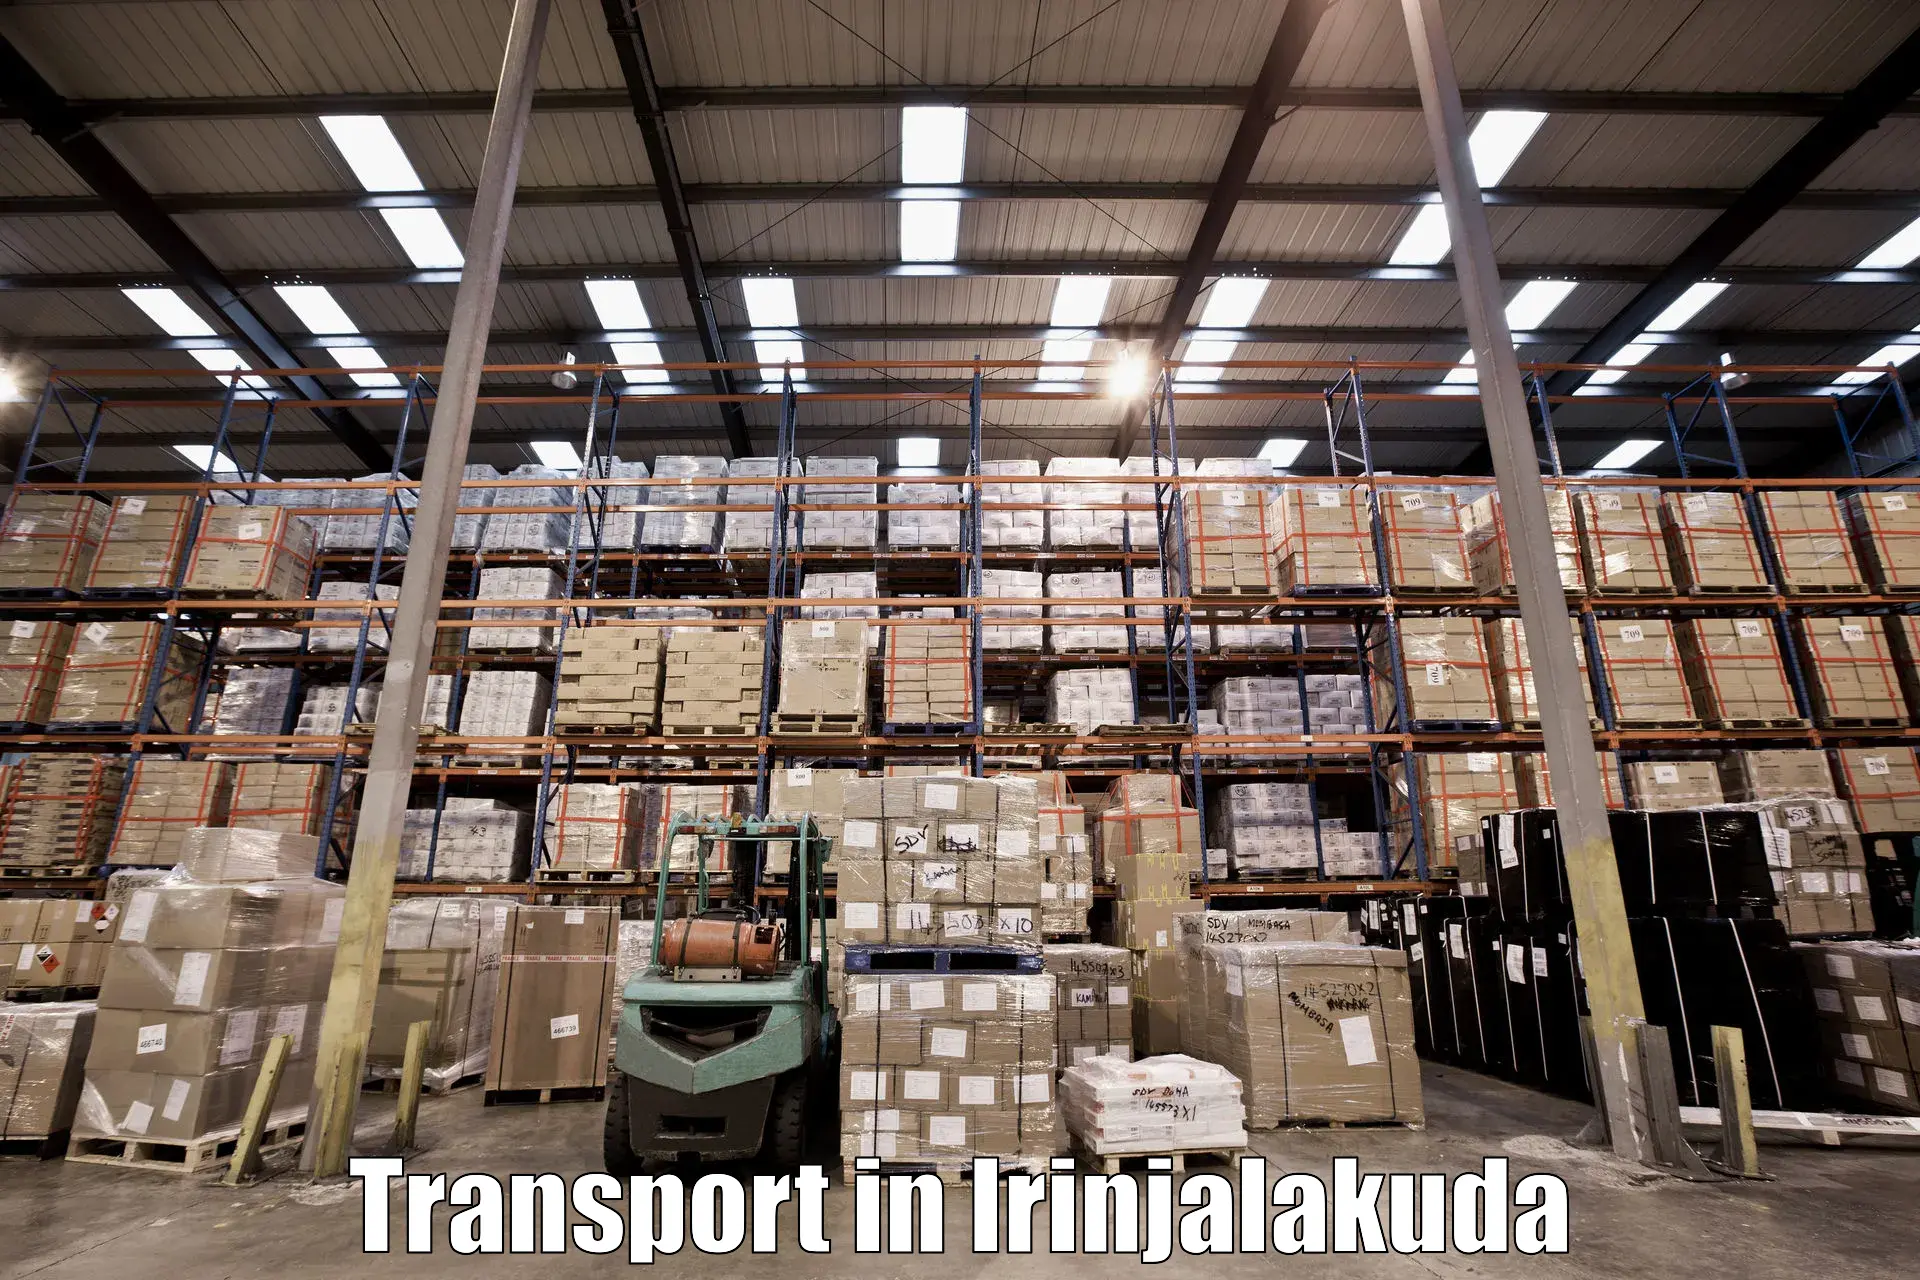 Nearby transport service in Irinjalakuda